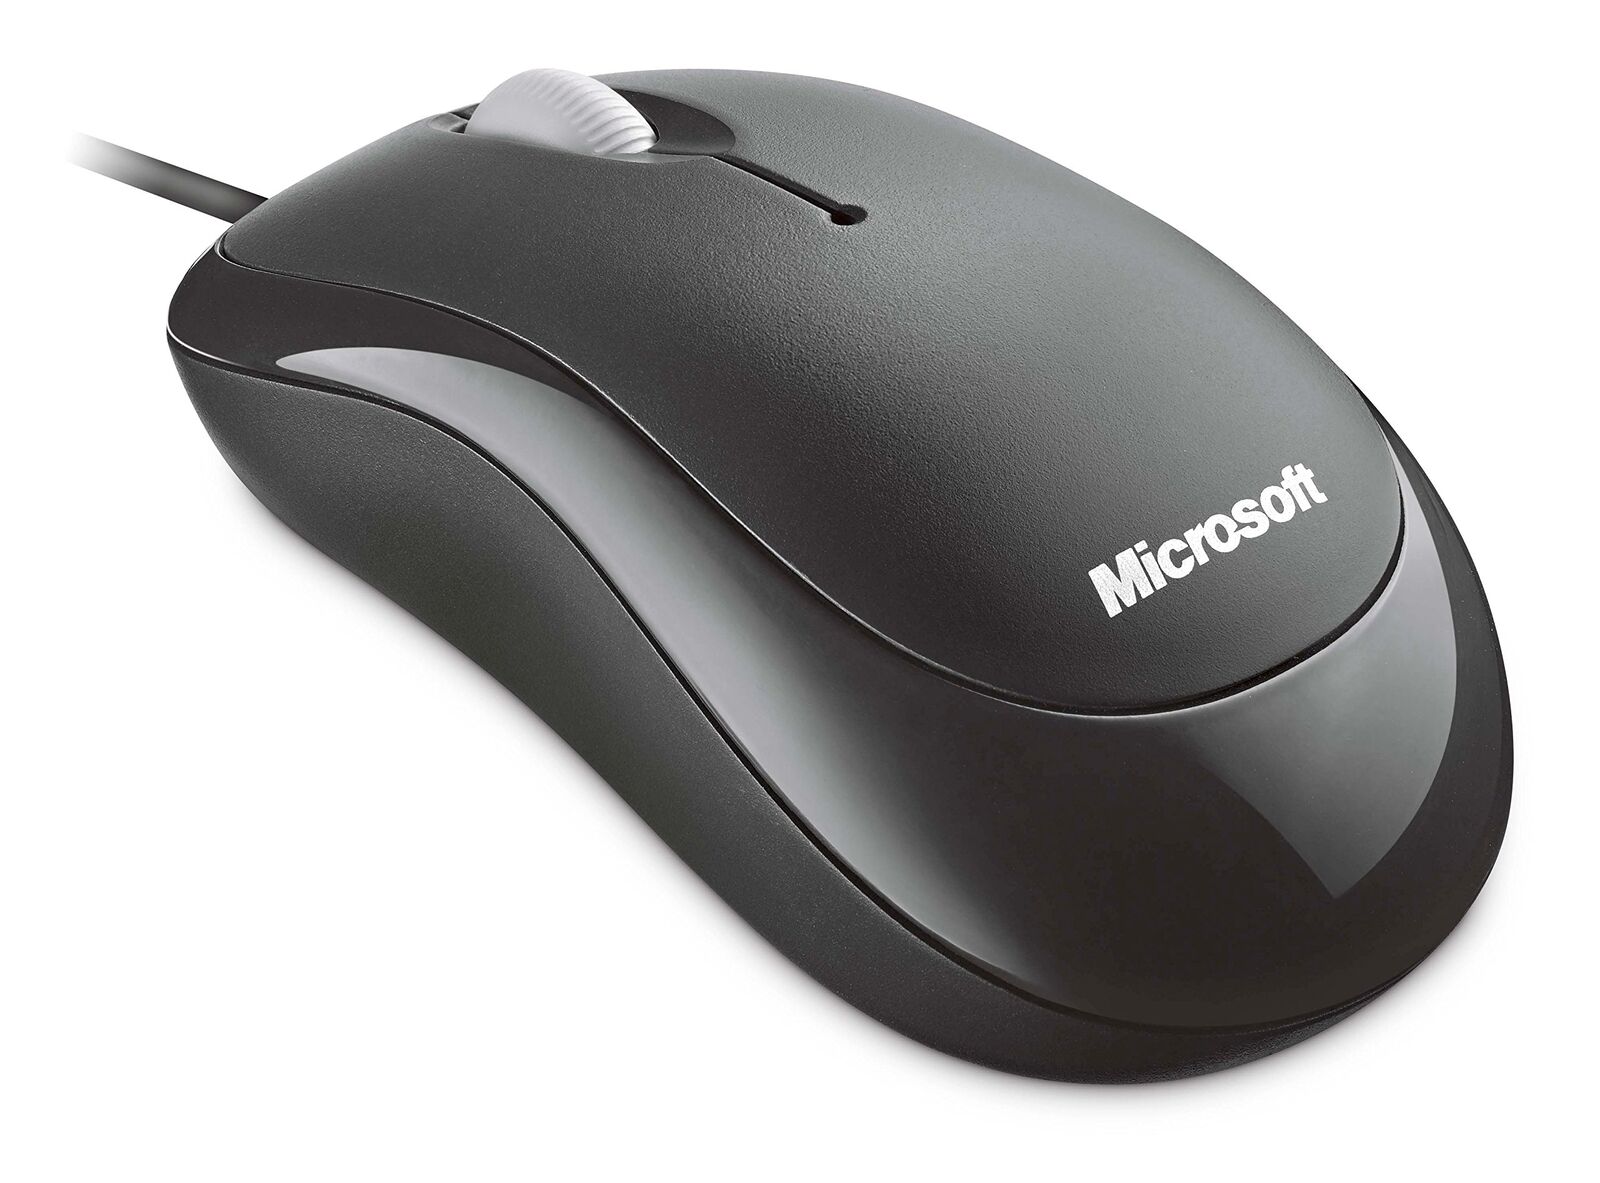 4YH-00007-Mouse óptico básico Microsoft para empresas - negro. Mouse USB cómodo, con cable